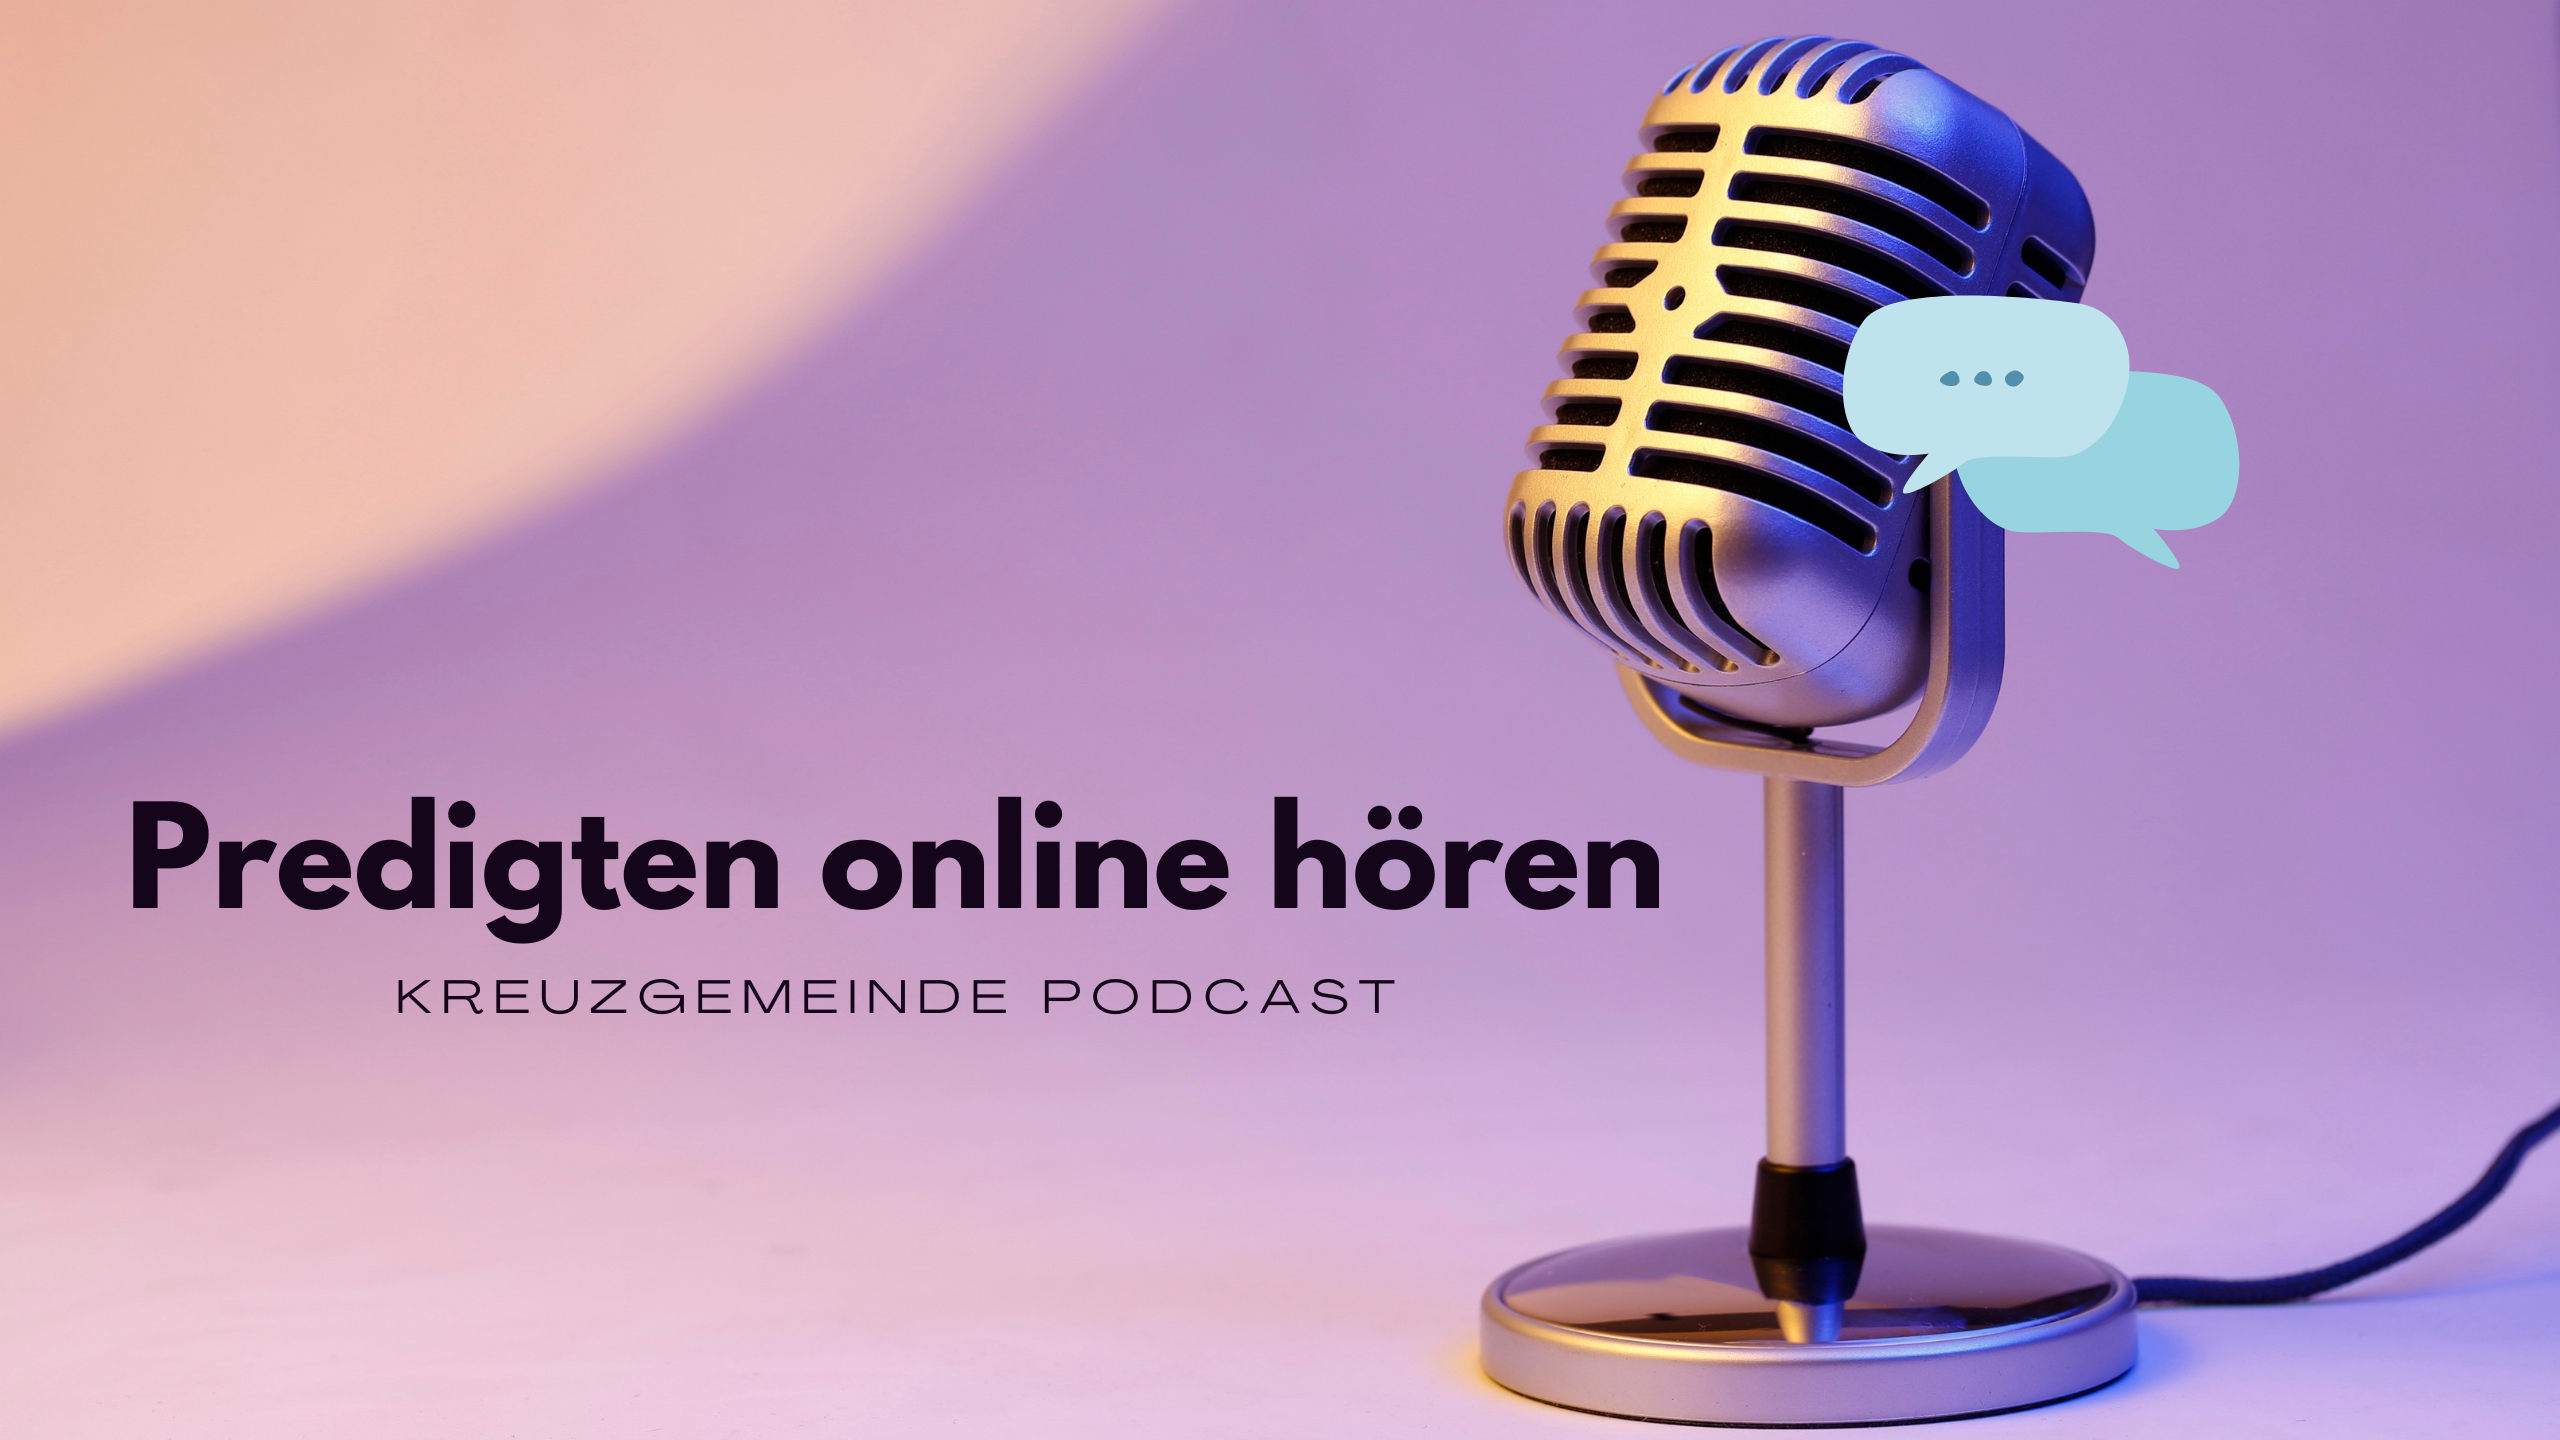 Podcast der Kreuzgemeinde Eickhorst